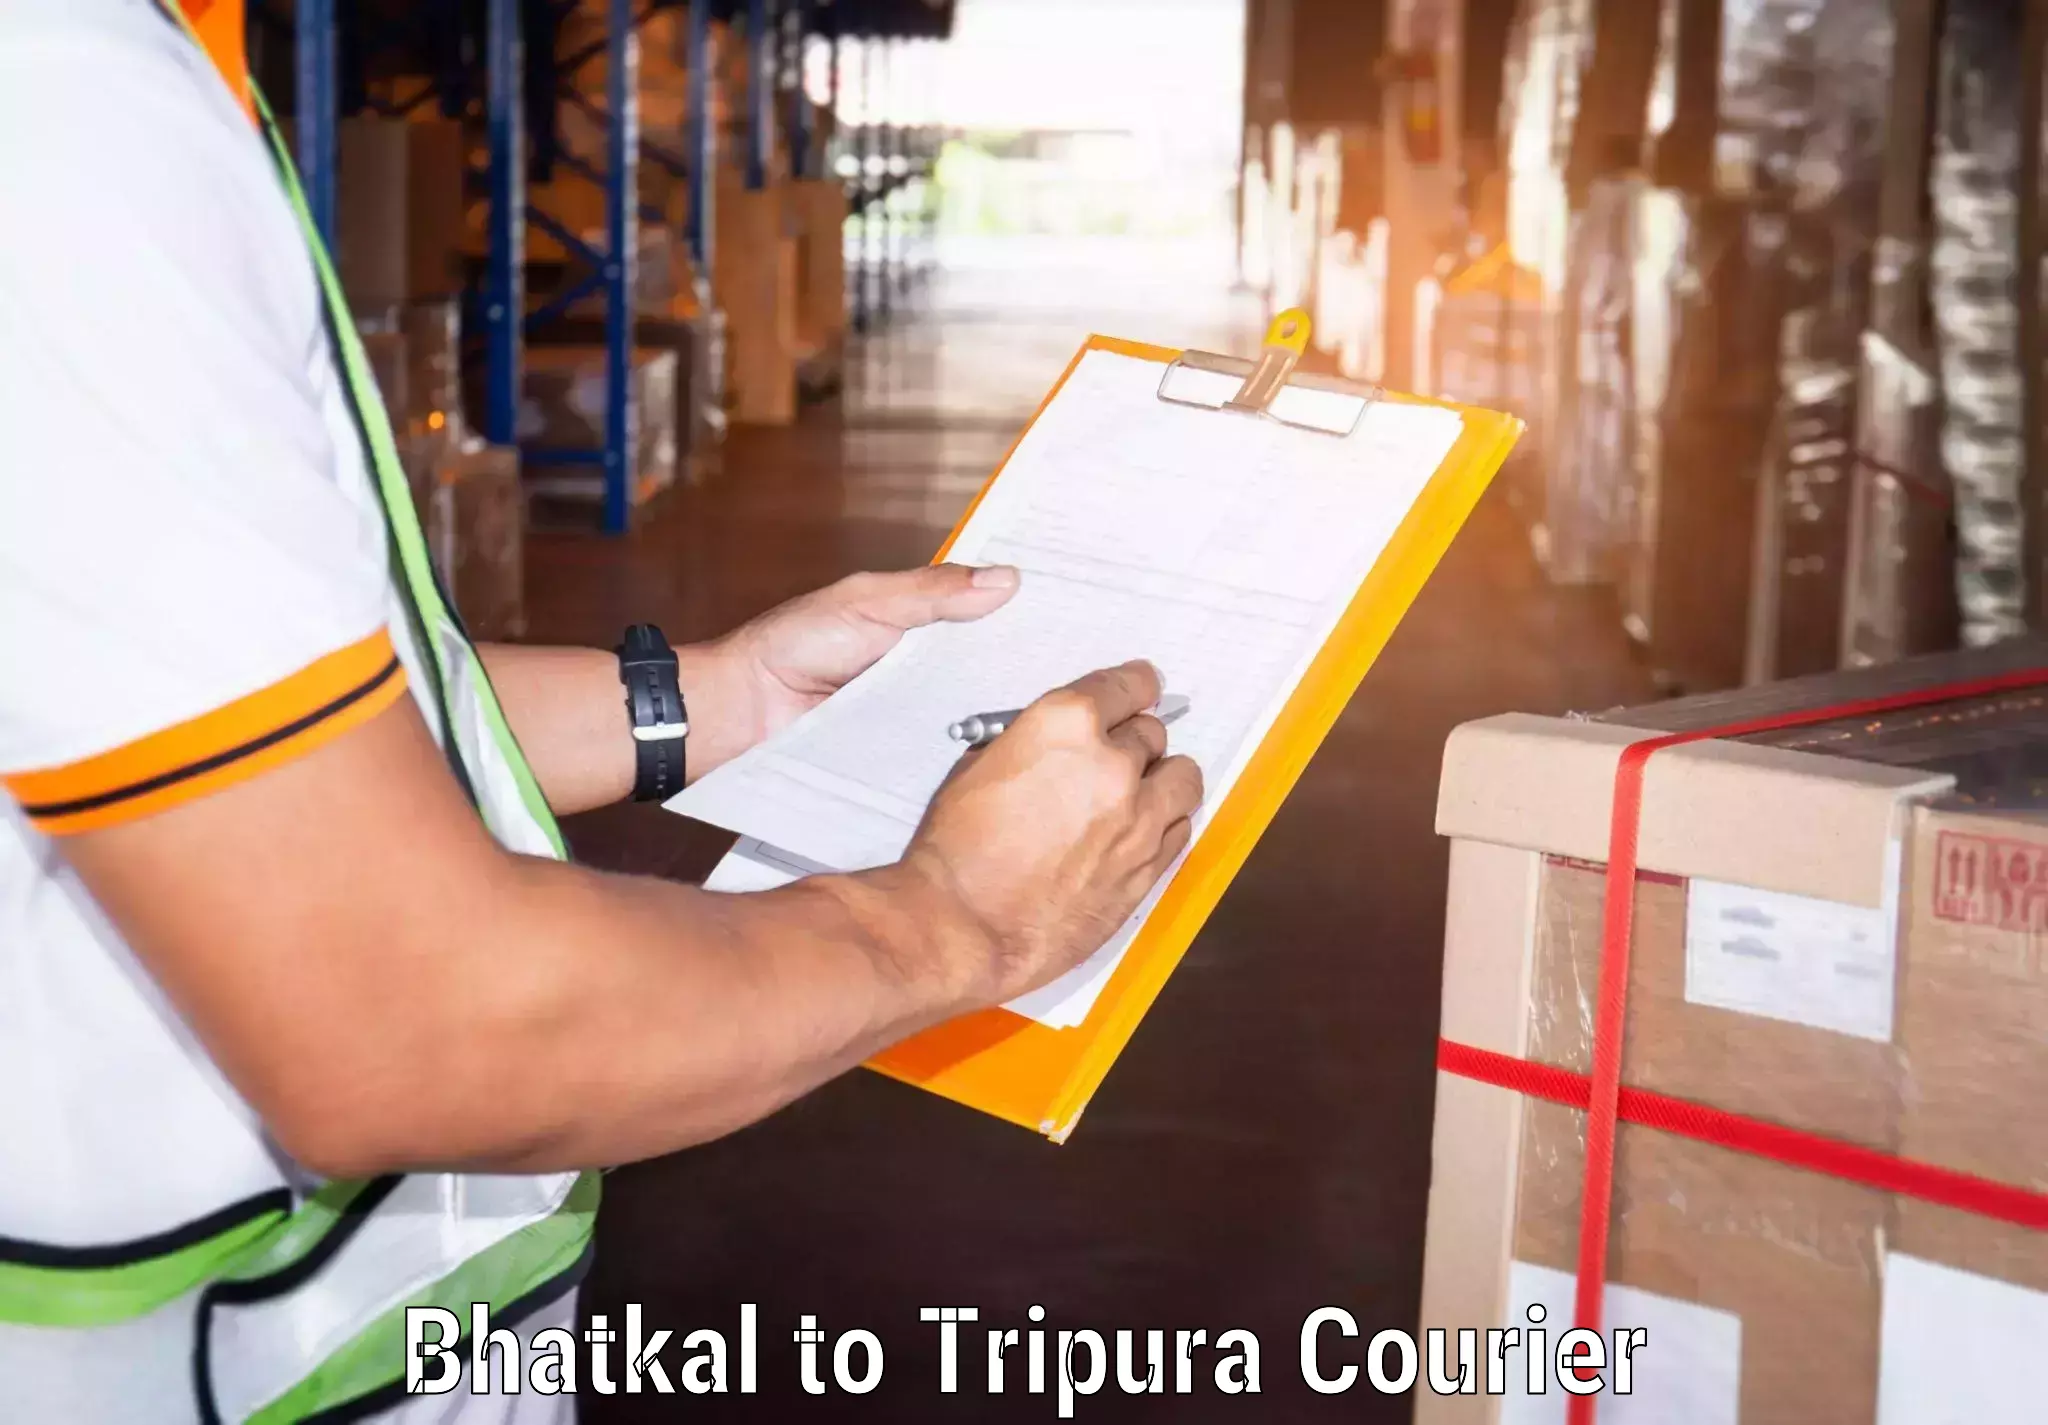 Urgent courier needs Bhatkal to Udaipur Tripura